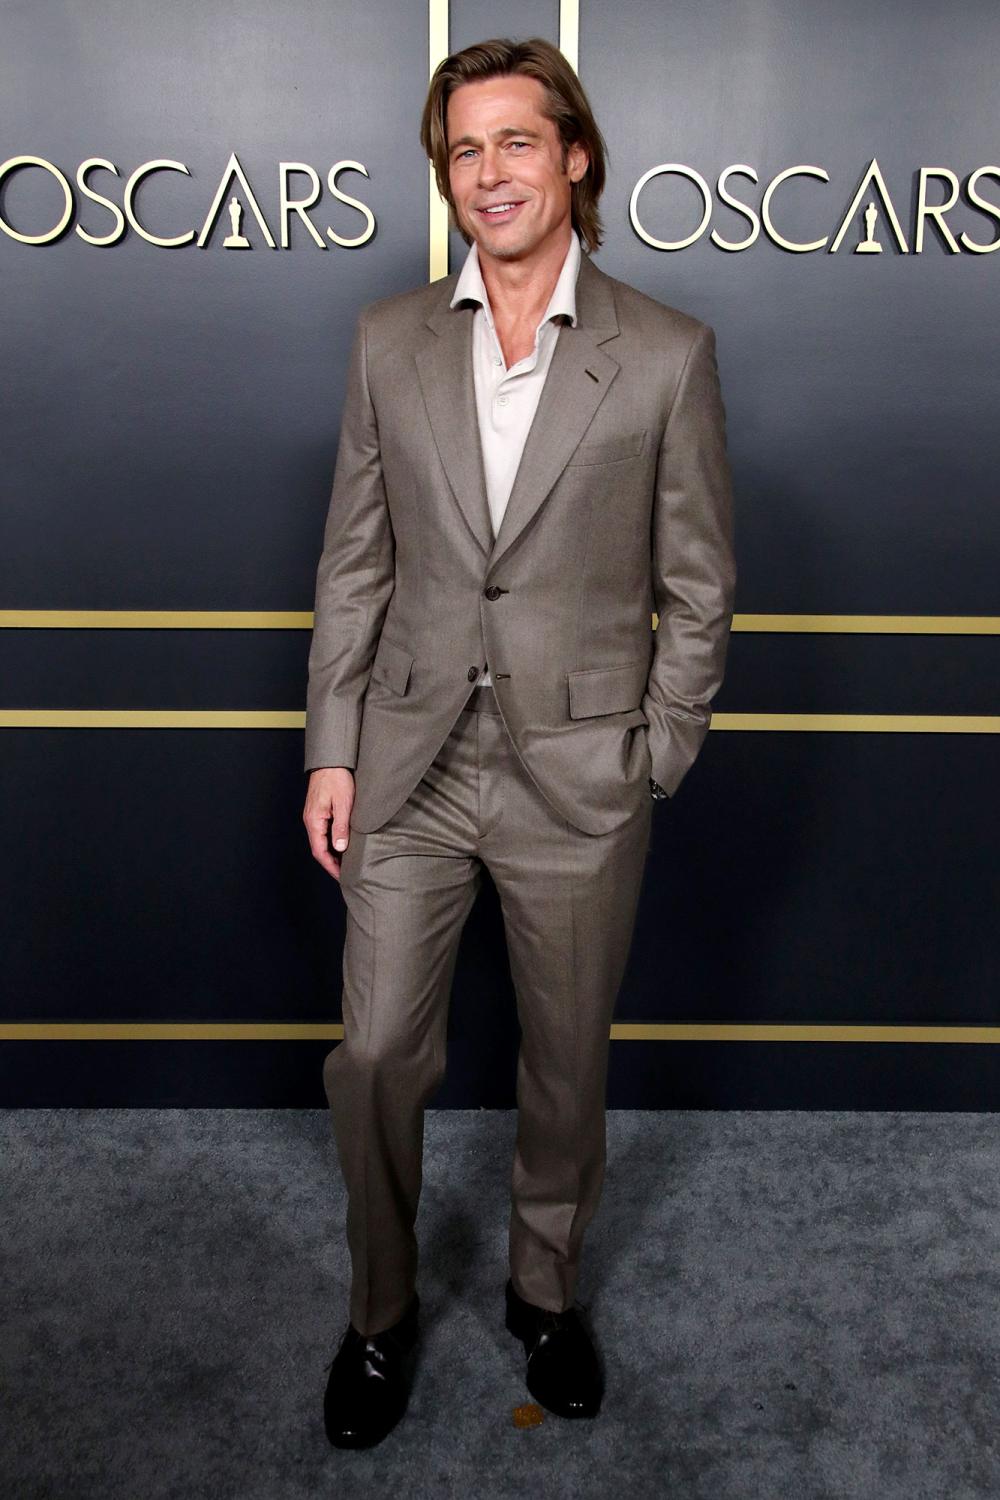 Brioni: The Brad Pitt Wardrobe